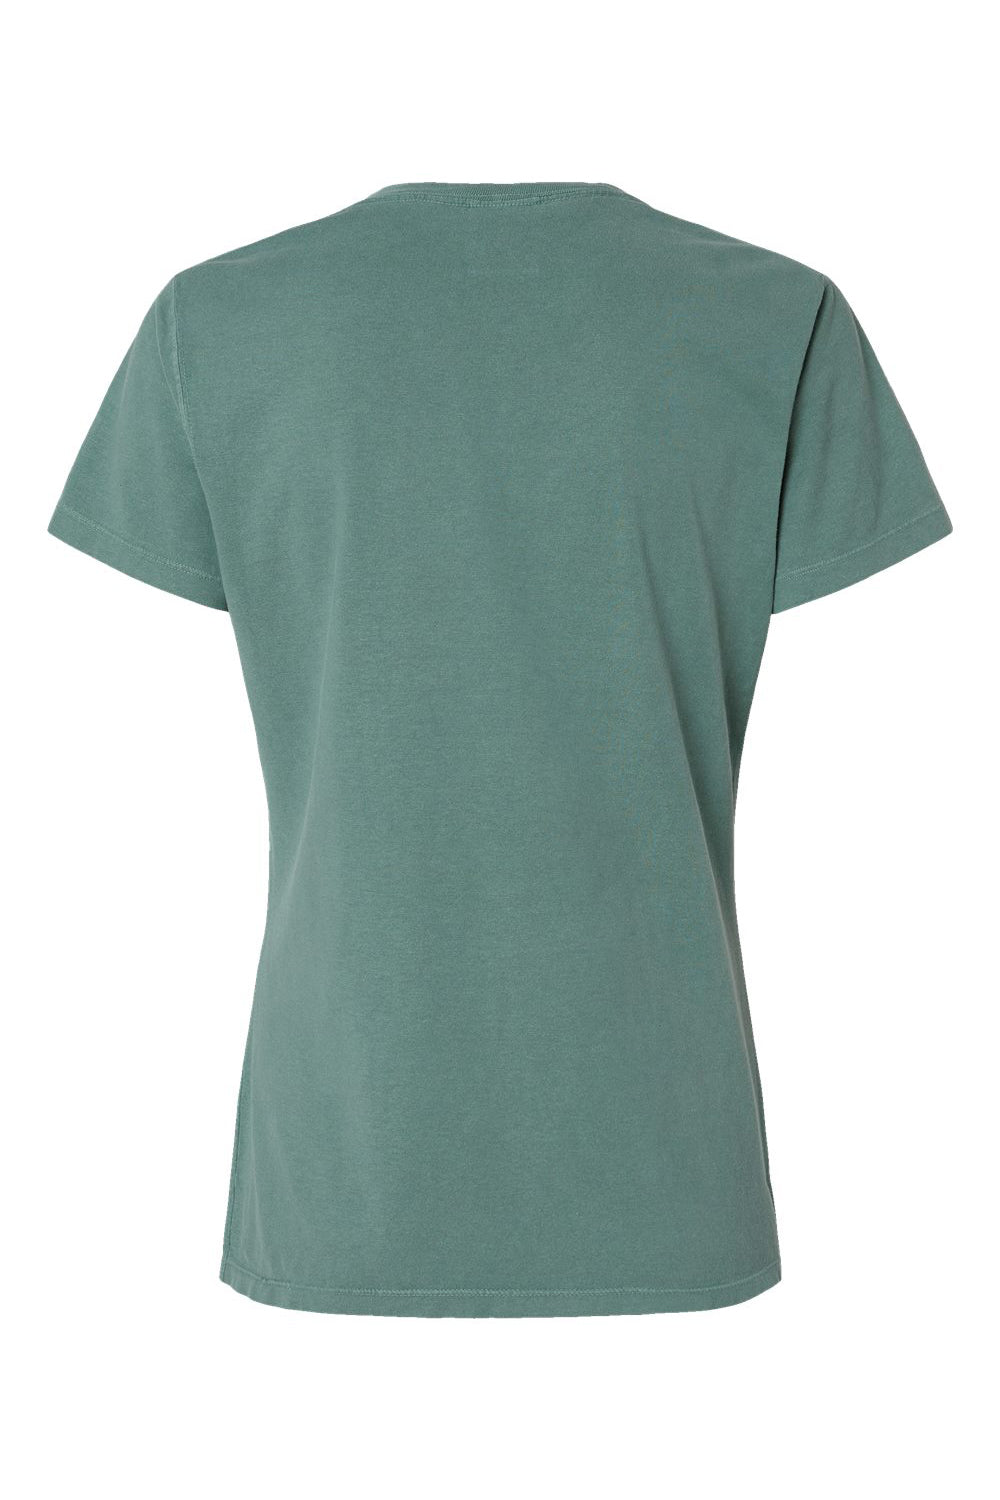 ComfortWash By Hanes GDH125 Mens Garment Dyed Short Sleeve V-Neck T-Shirt Cypress Green Flat Back